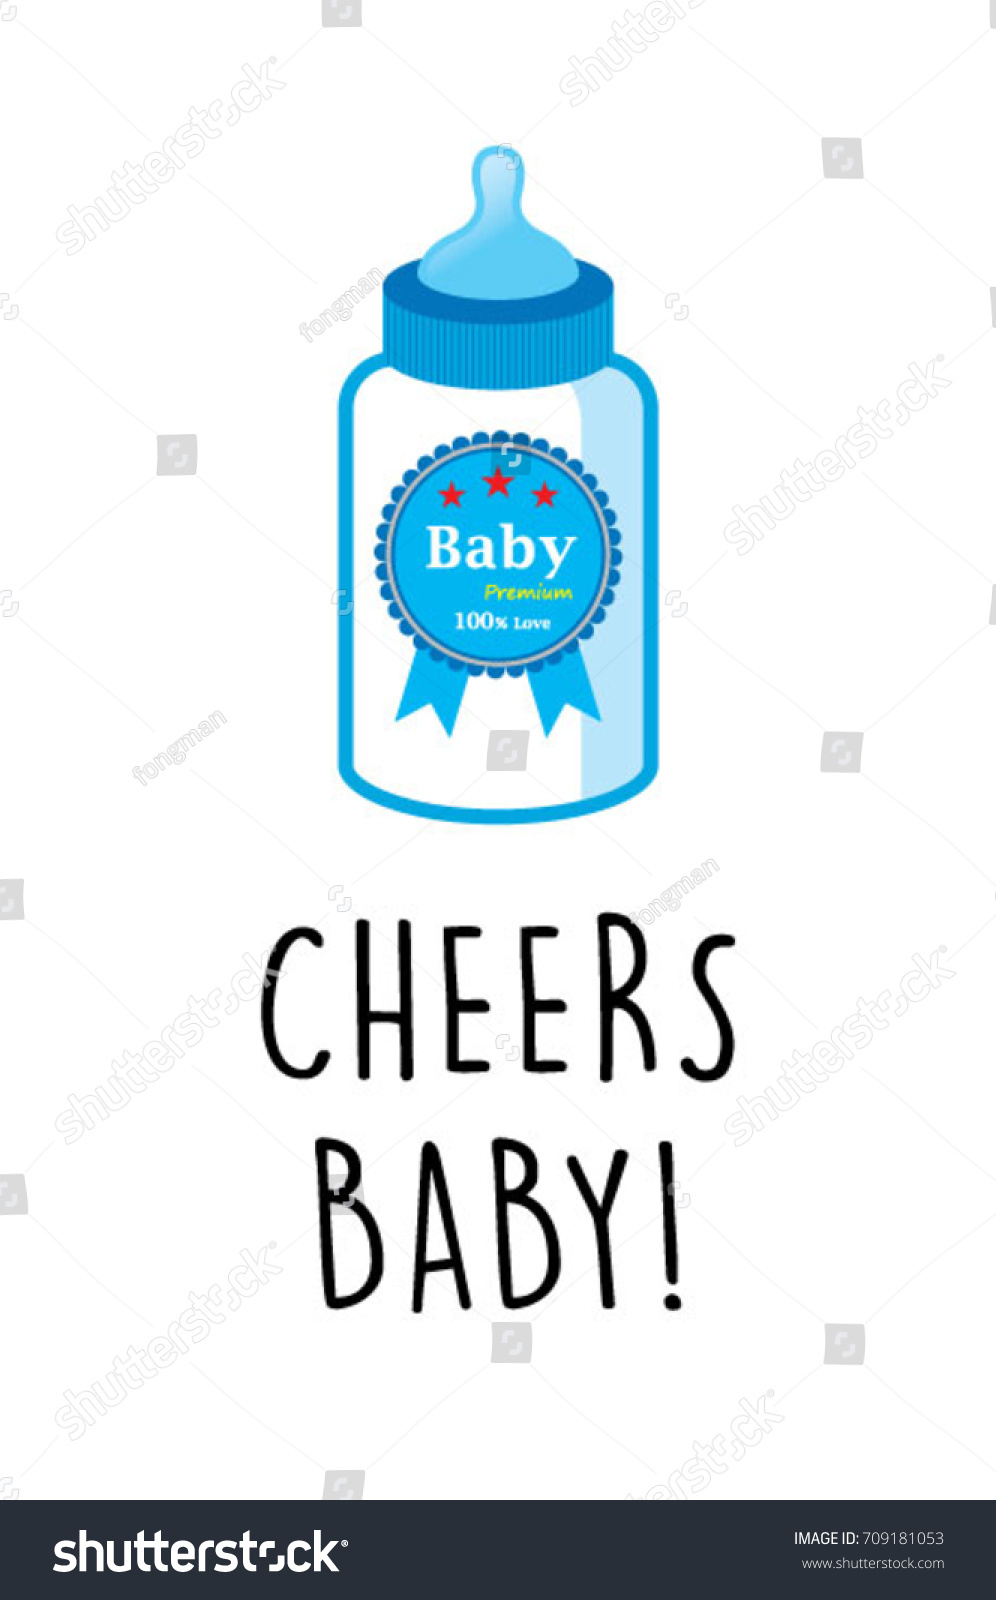 Download Cute Baby Milk Beer Bottle Cheers Stock Vector Royalty Free 709181053